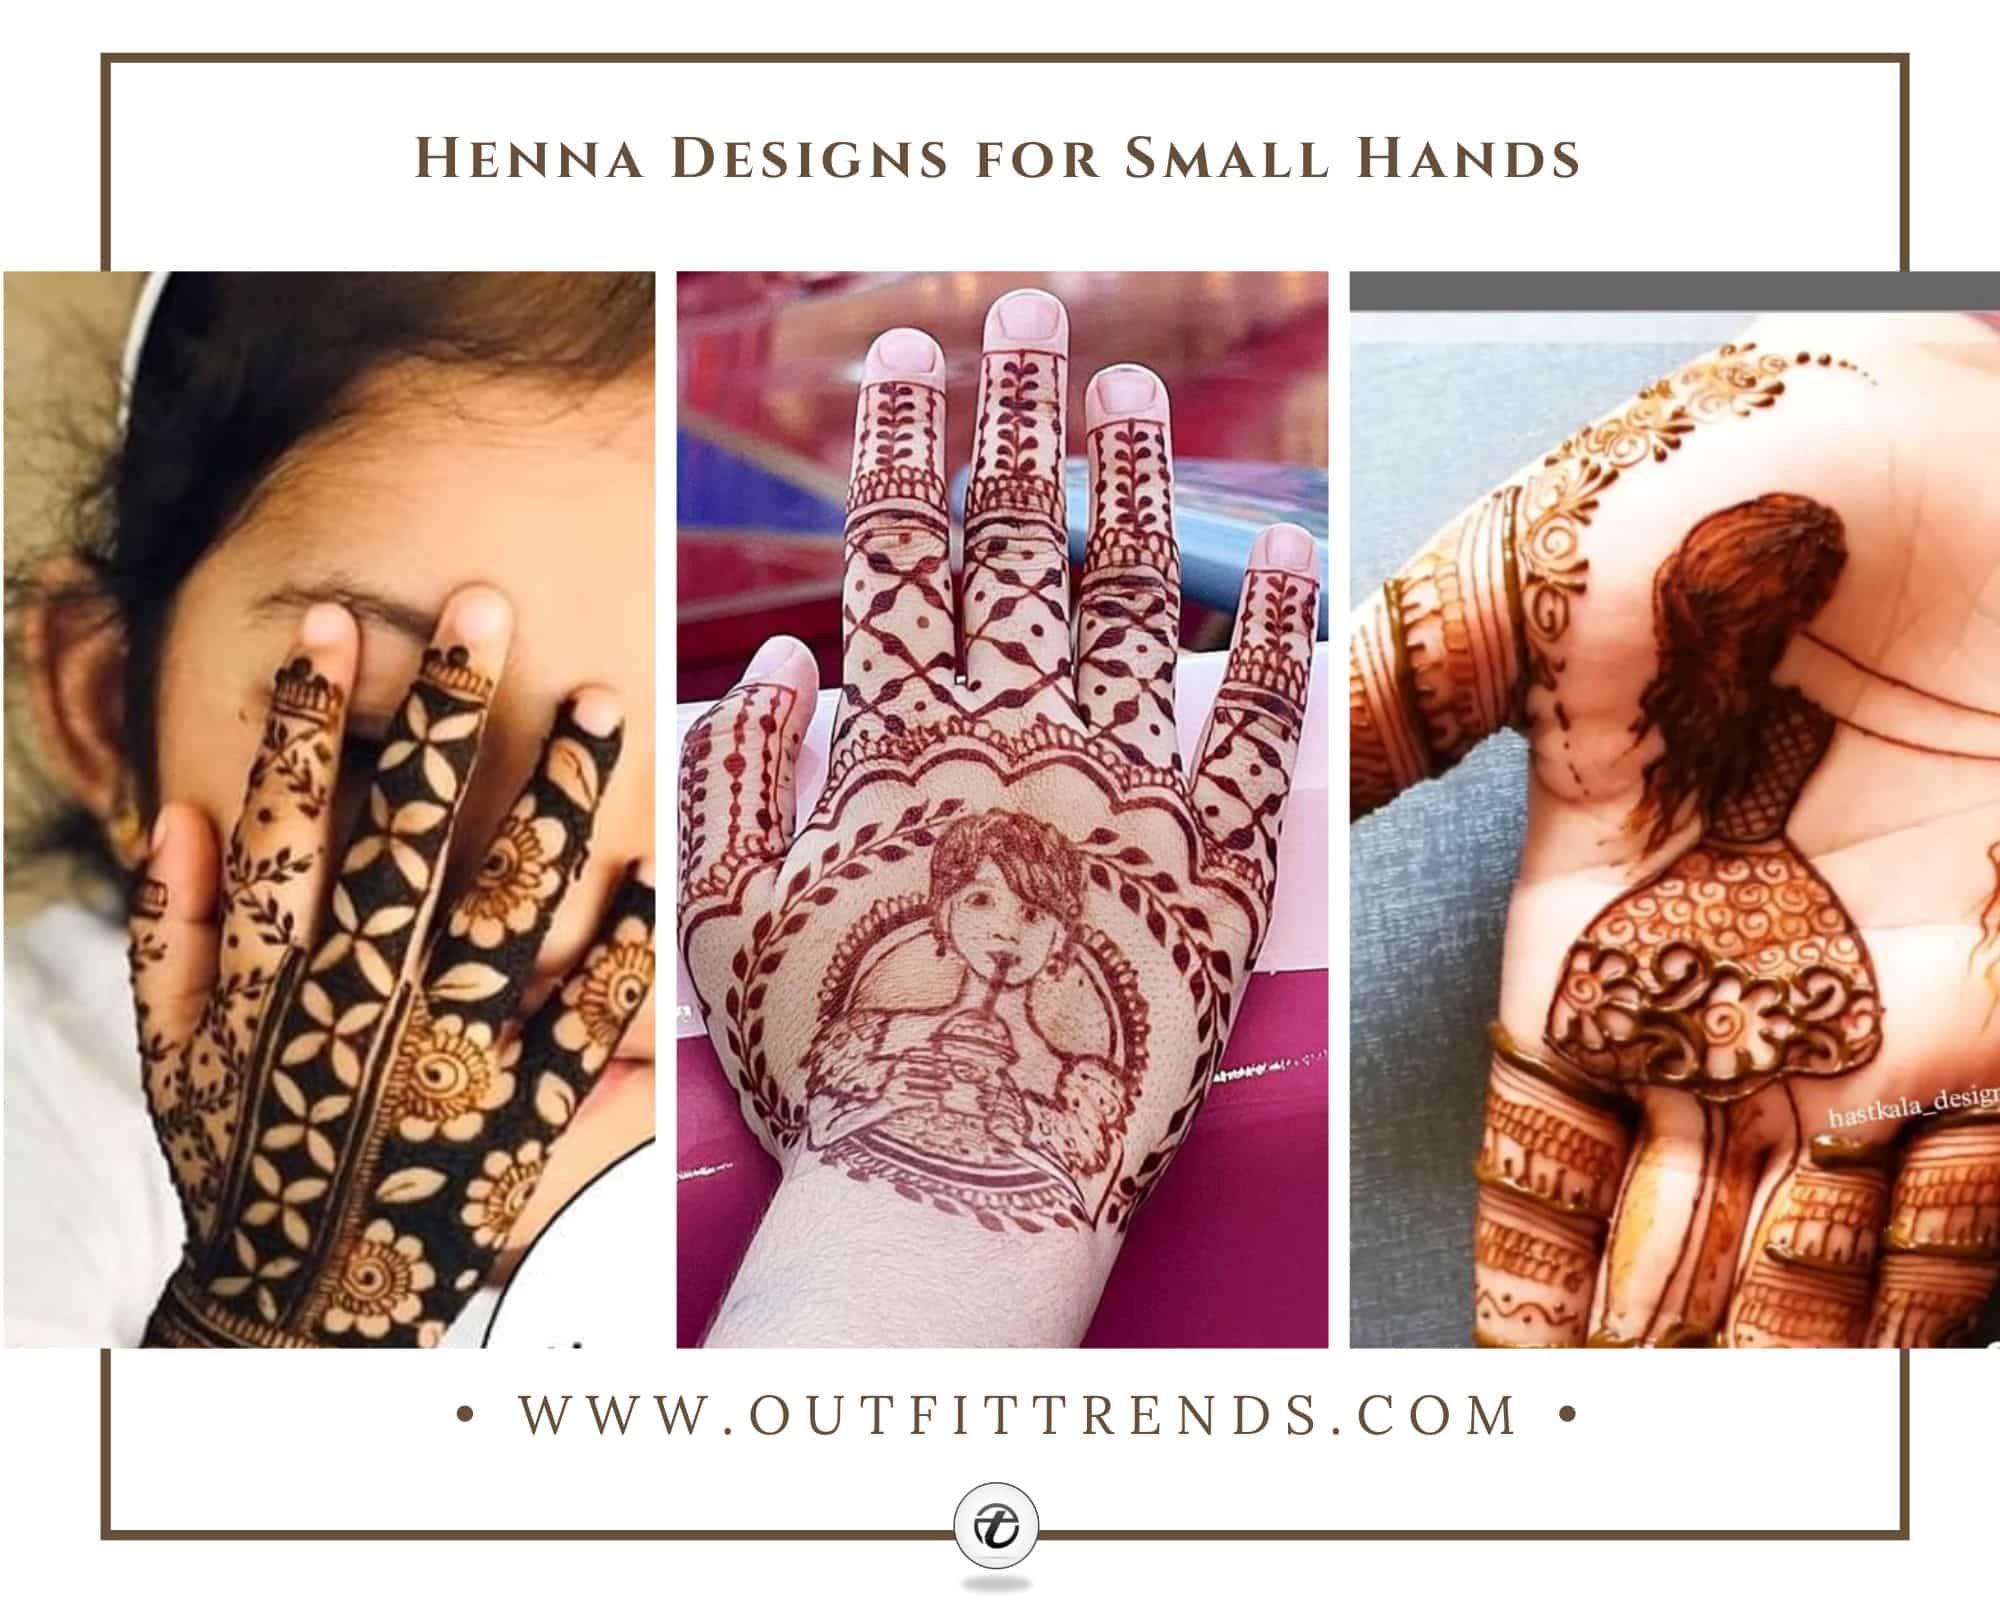 20 Boys Mehndi Design for Grooms that are Anything but Basic | Bridal  Mehendi and Makeup | Wedding Blog